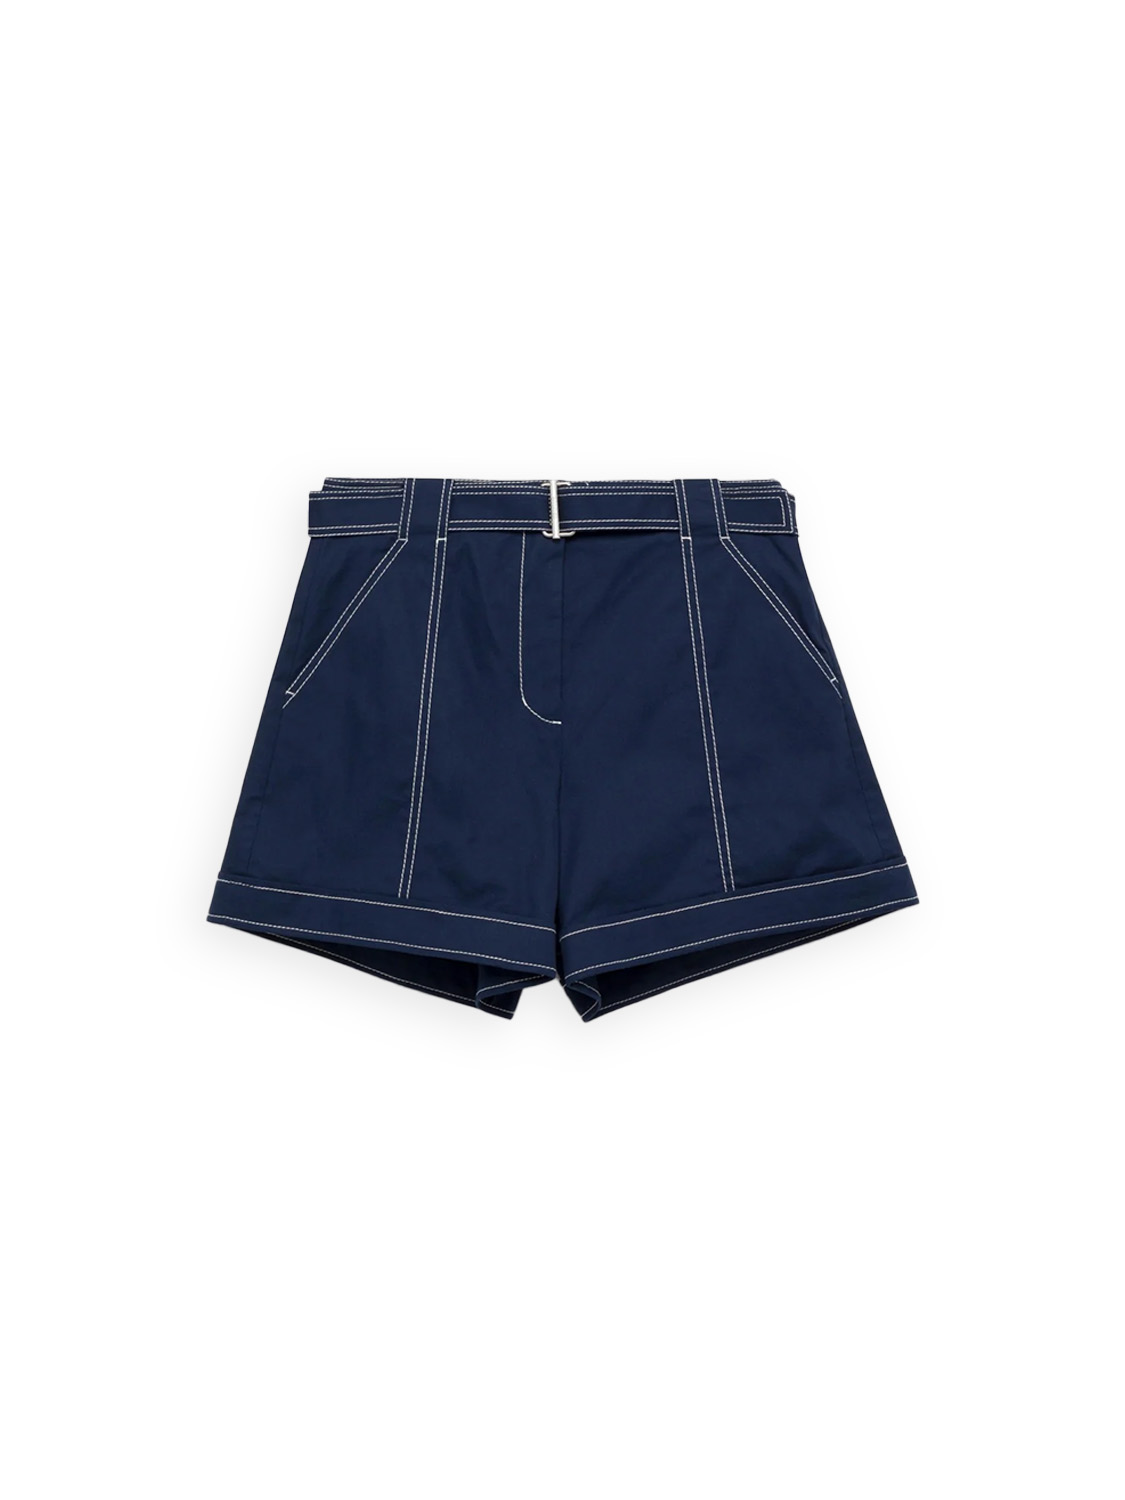 Simkhai Lourie – Shorts mit weißen Nahtdetail  blau 36